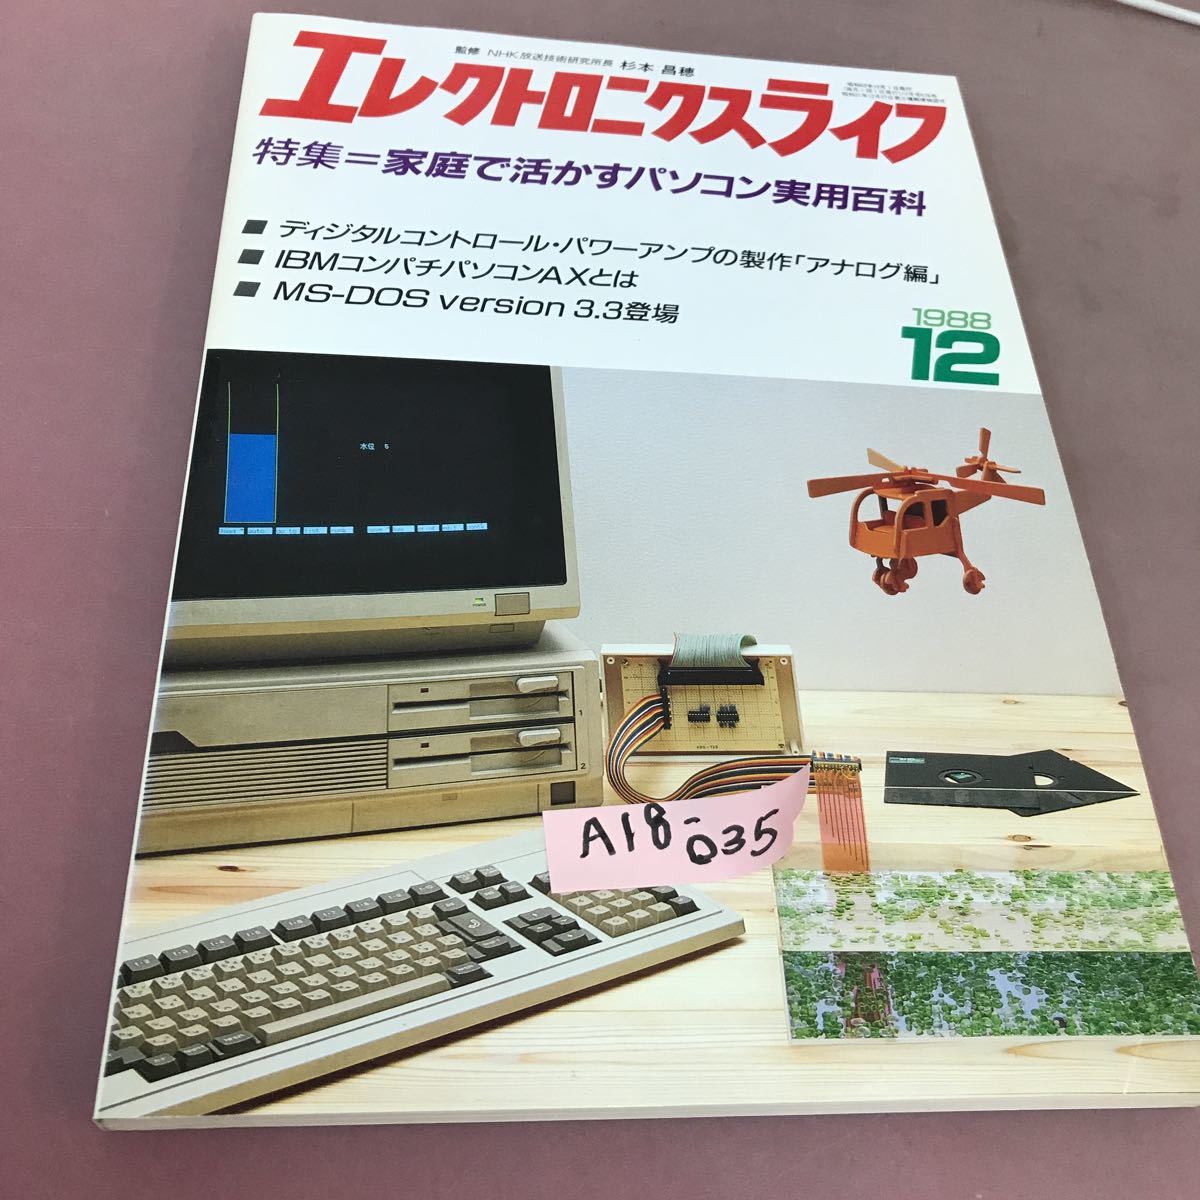 A18-035 エレクトロニクスライフ 1988.12 特集 家庭で活かすパソコン実用百科 日本放送出版協会